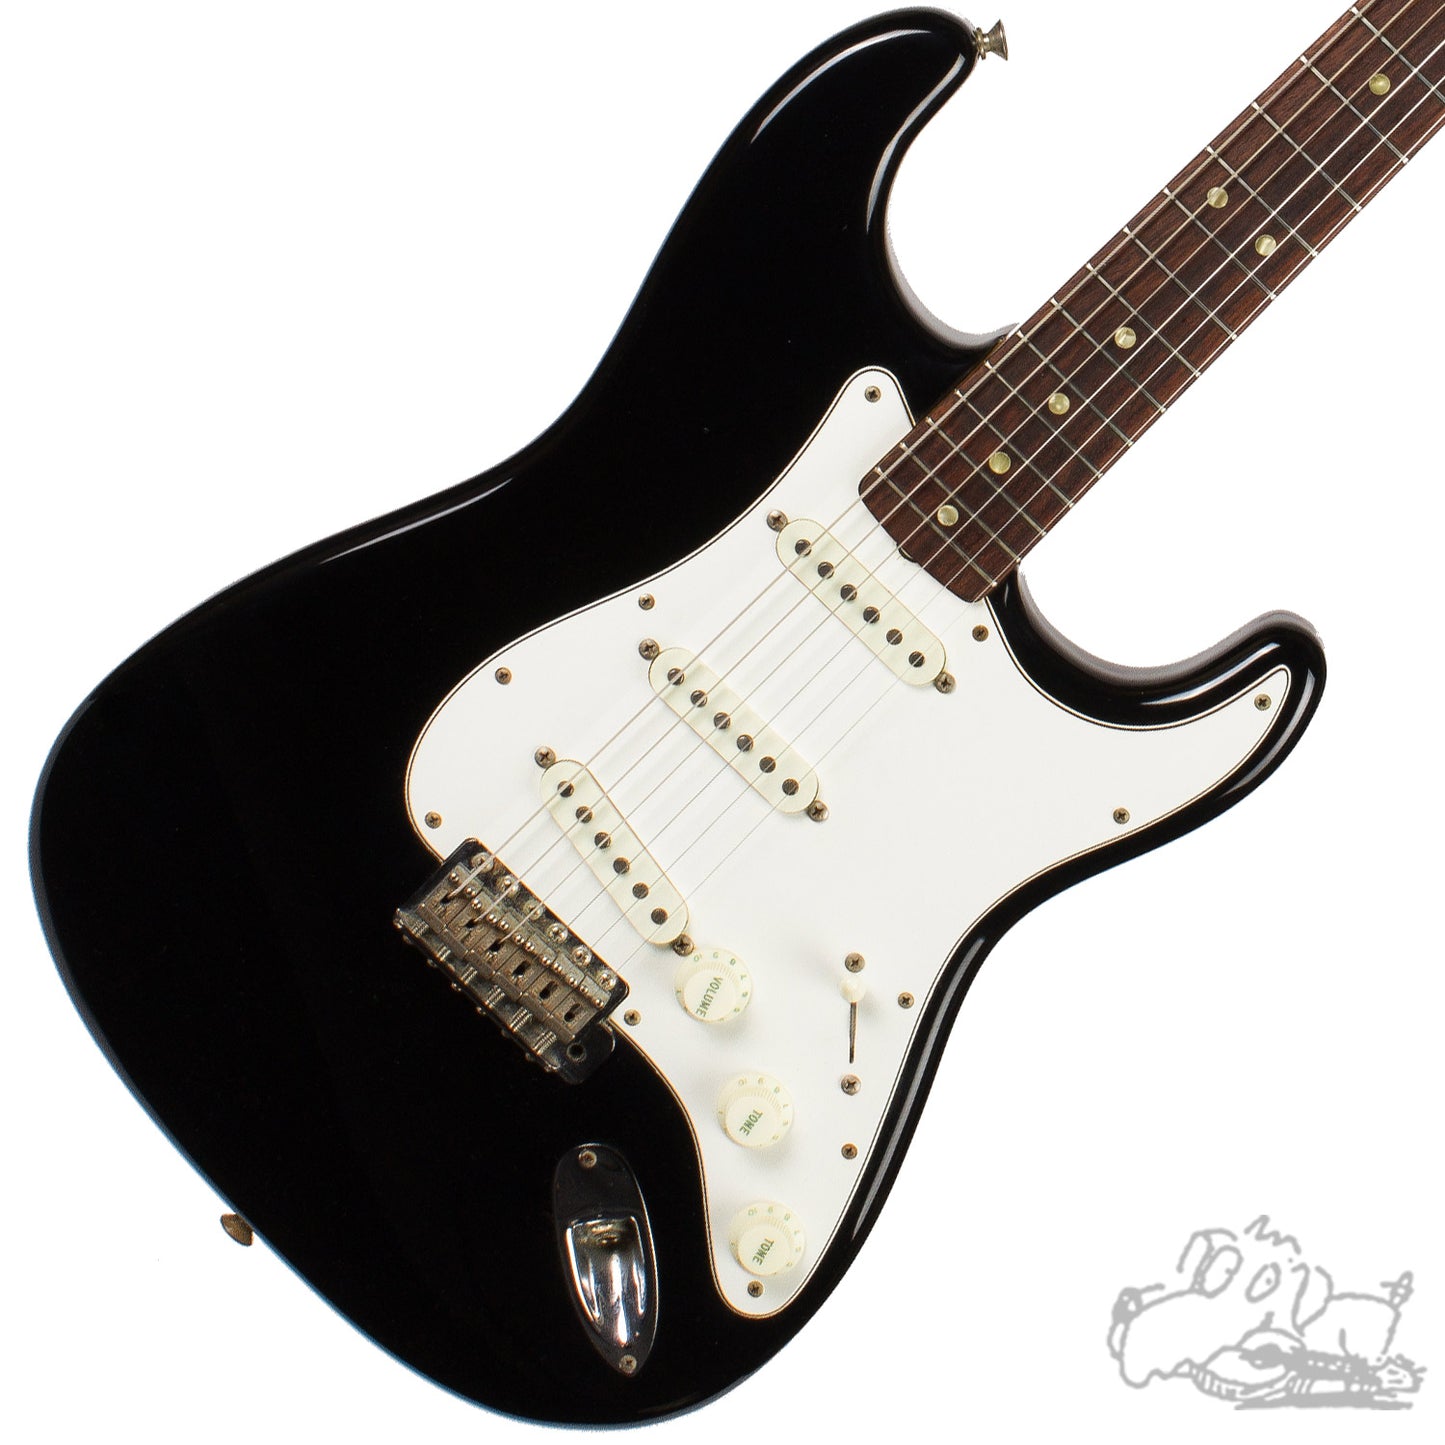 1967 Fender Stratocaster in factory Black finish